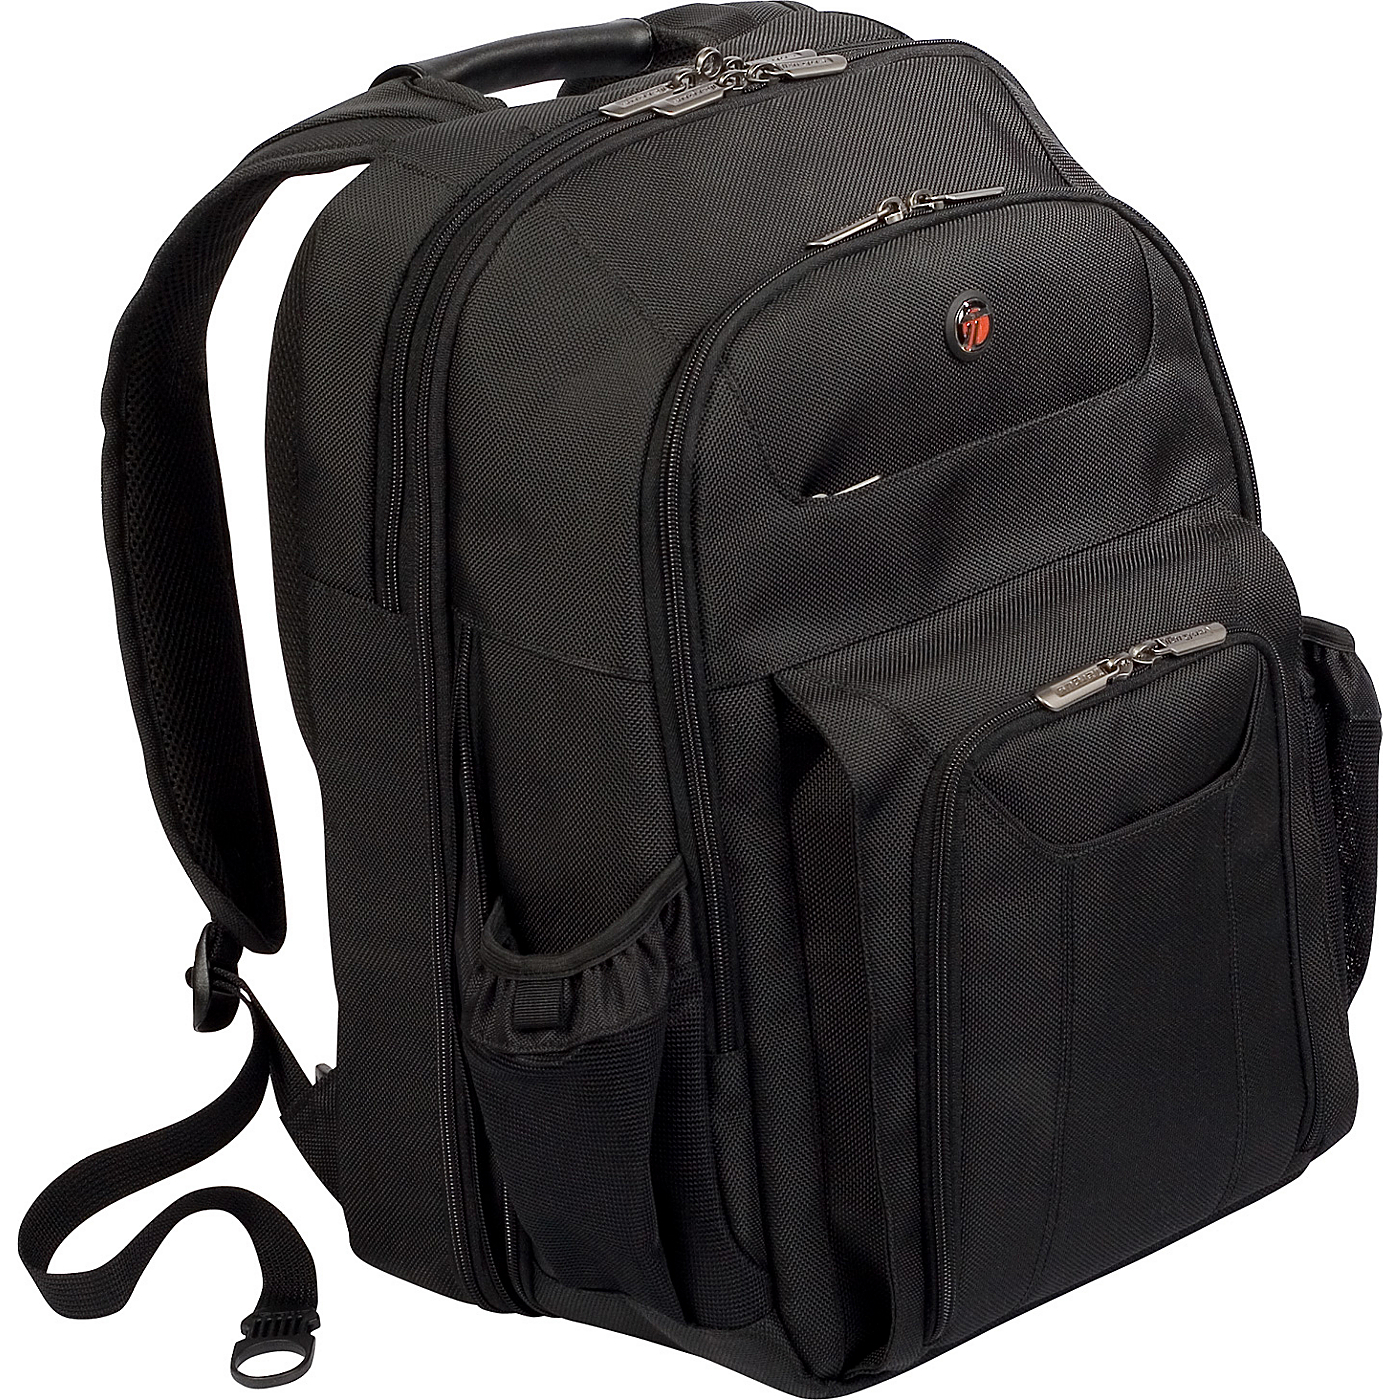 Corporate Traveler 15.4 Laptop Backpack Black